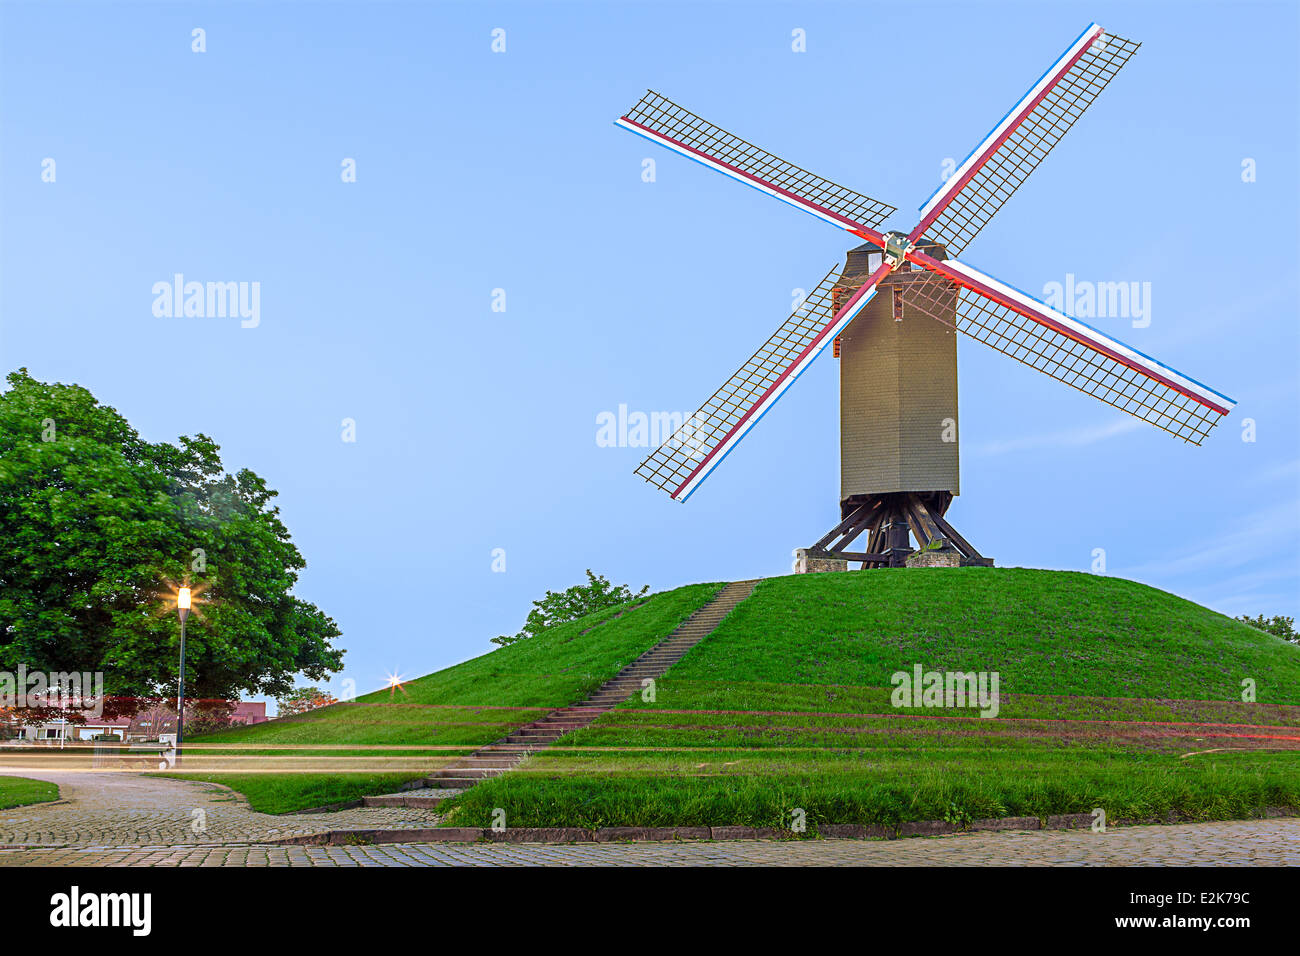 Su una collina a Bruges vi sono un mulino a vento Foto Stock